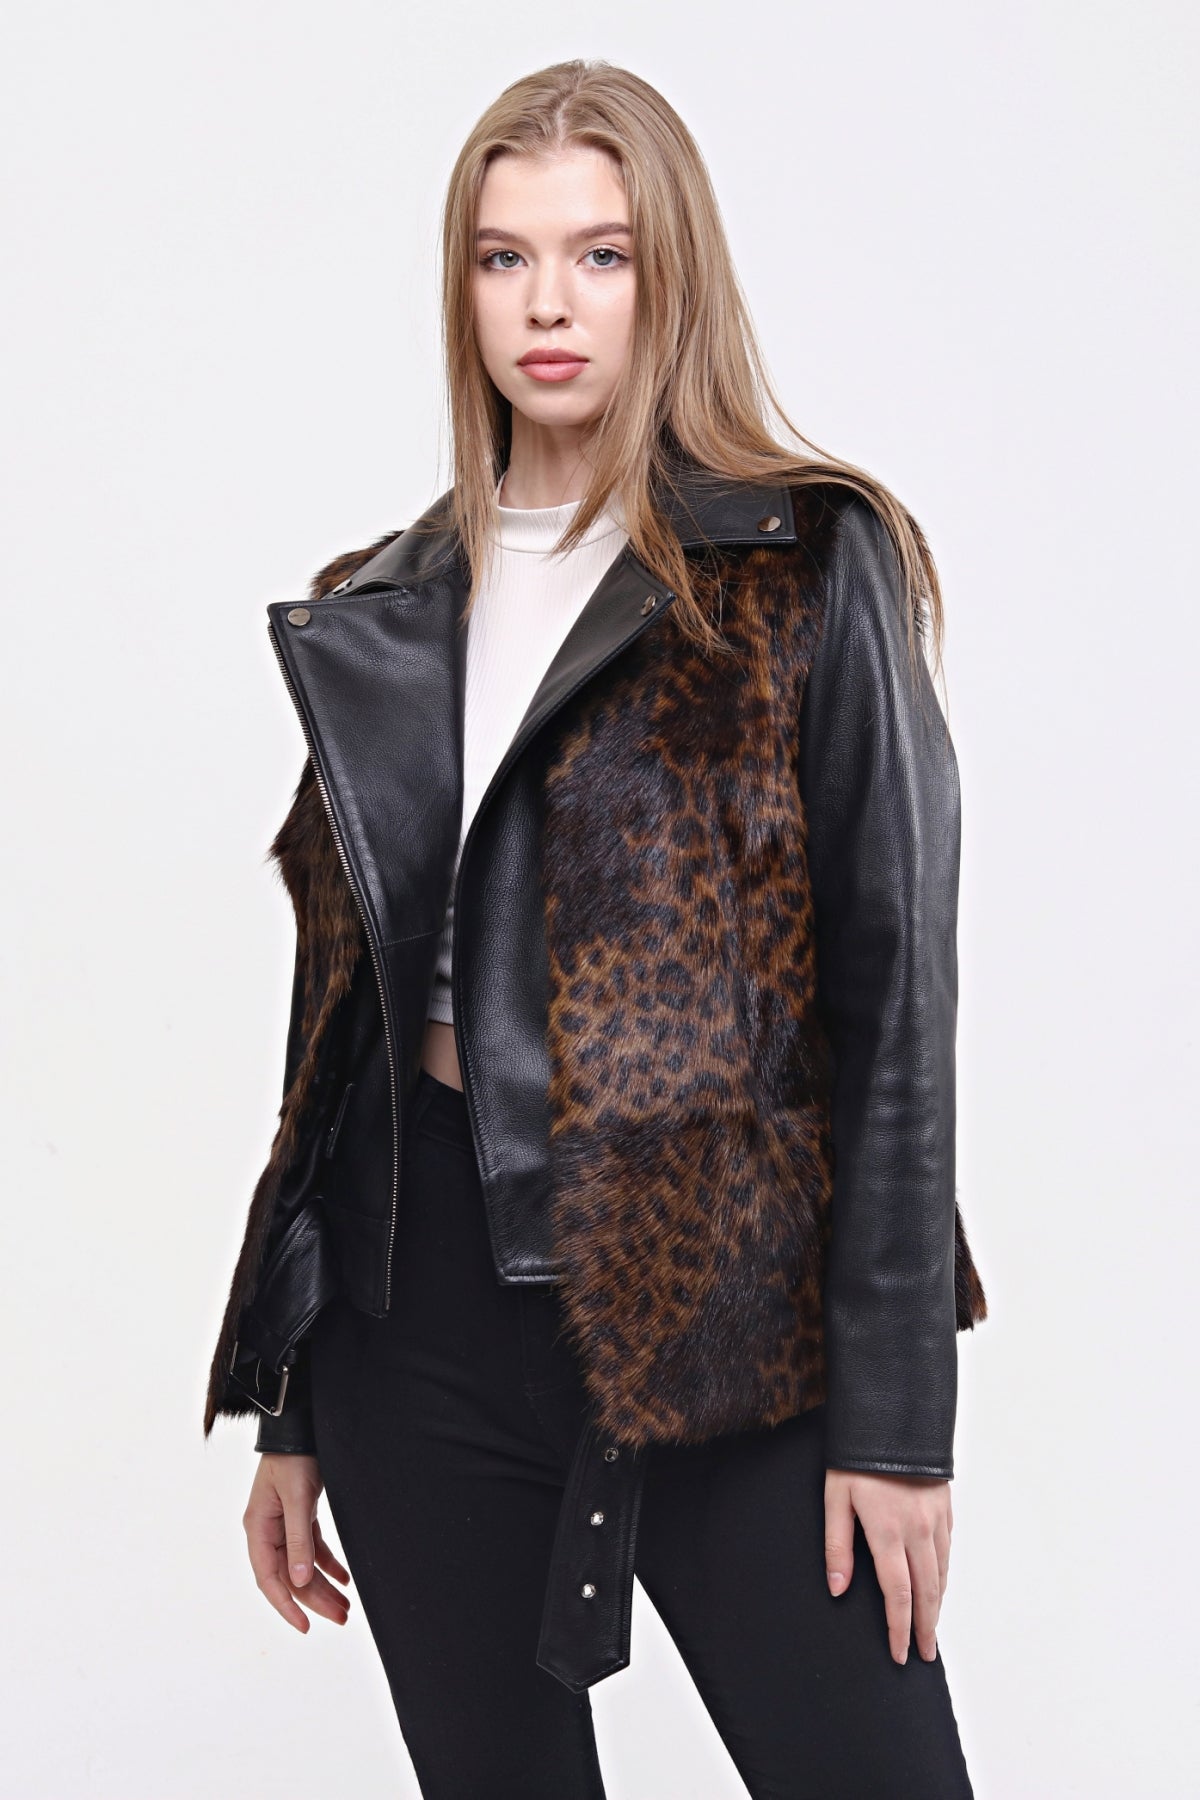 Leopard Patterned Women's Leather Vest